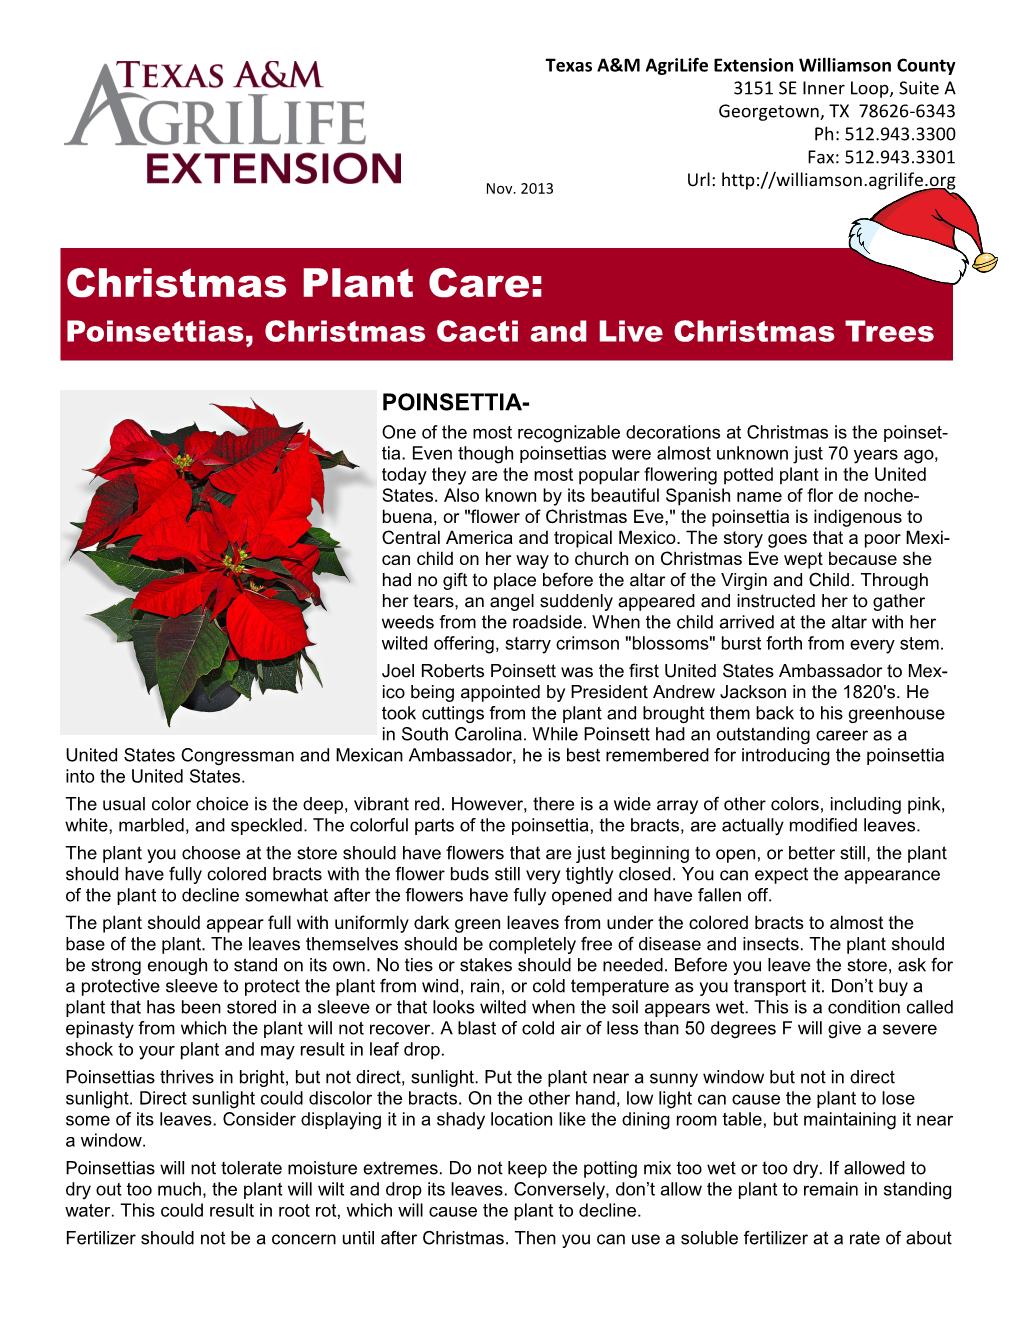 Christmas Plant Care Poinsetta-Cacti-Trees